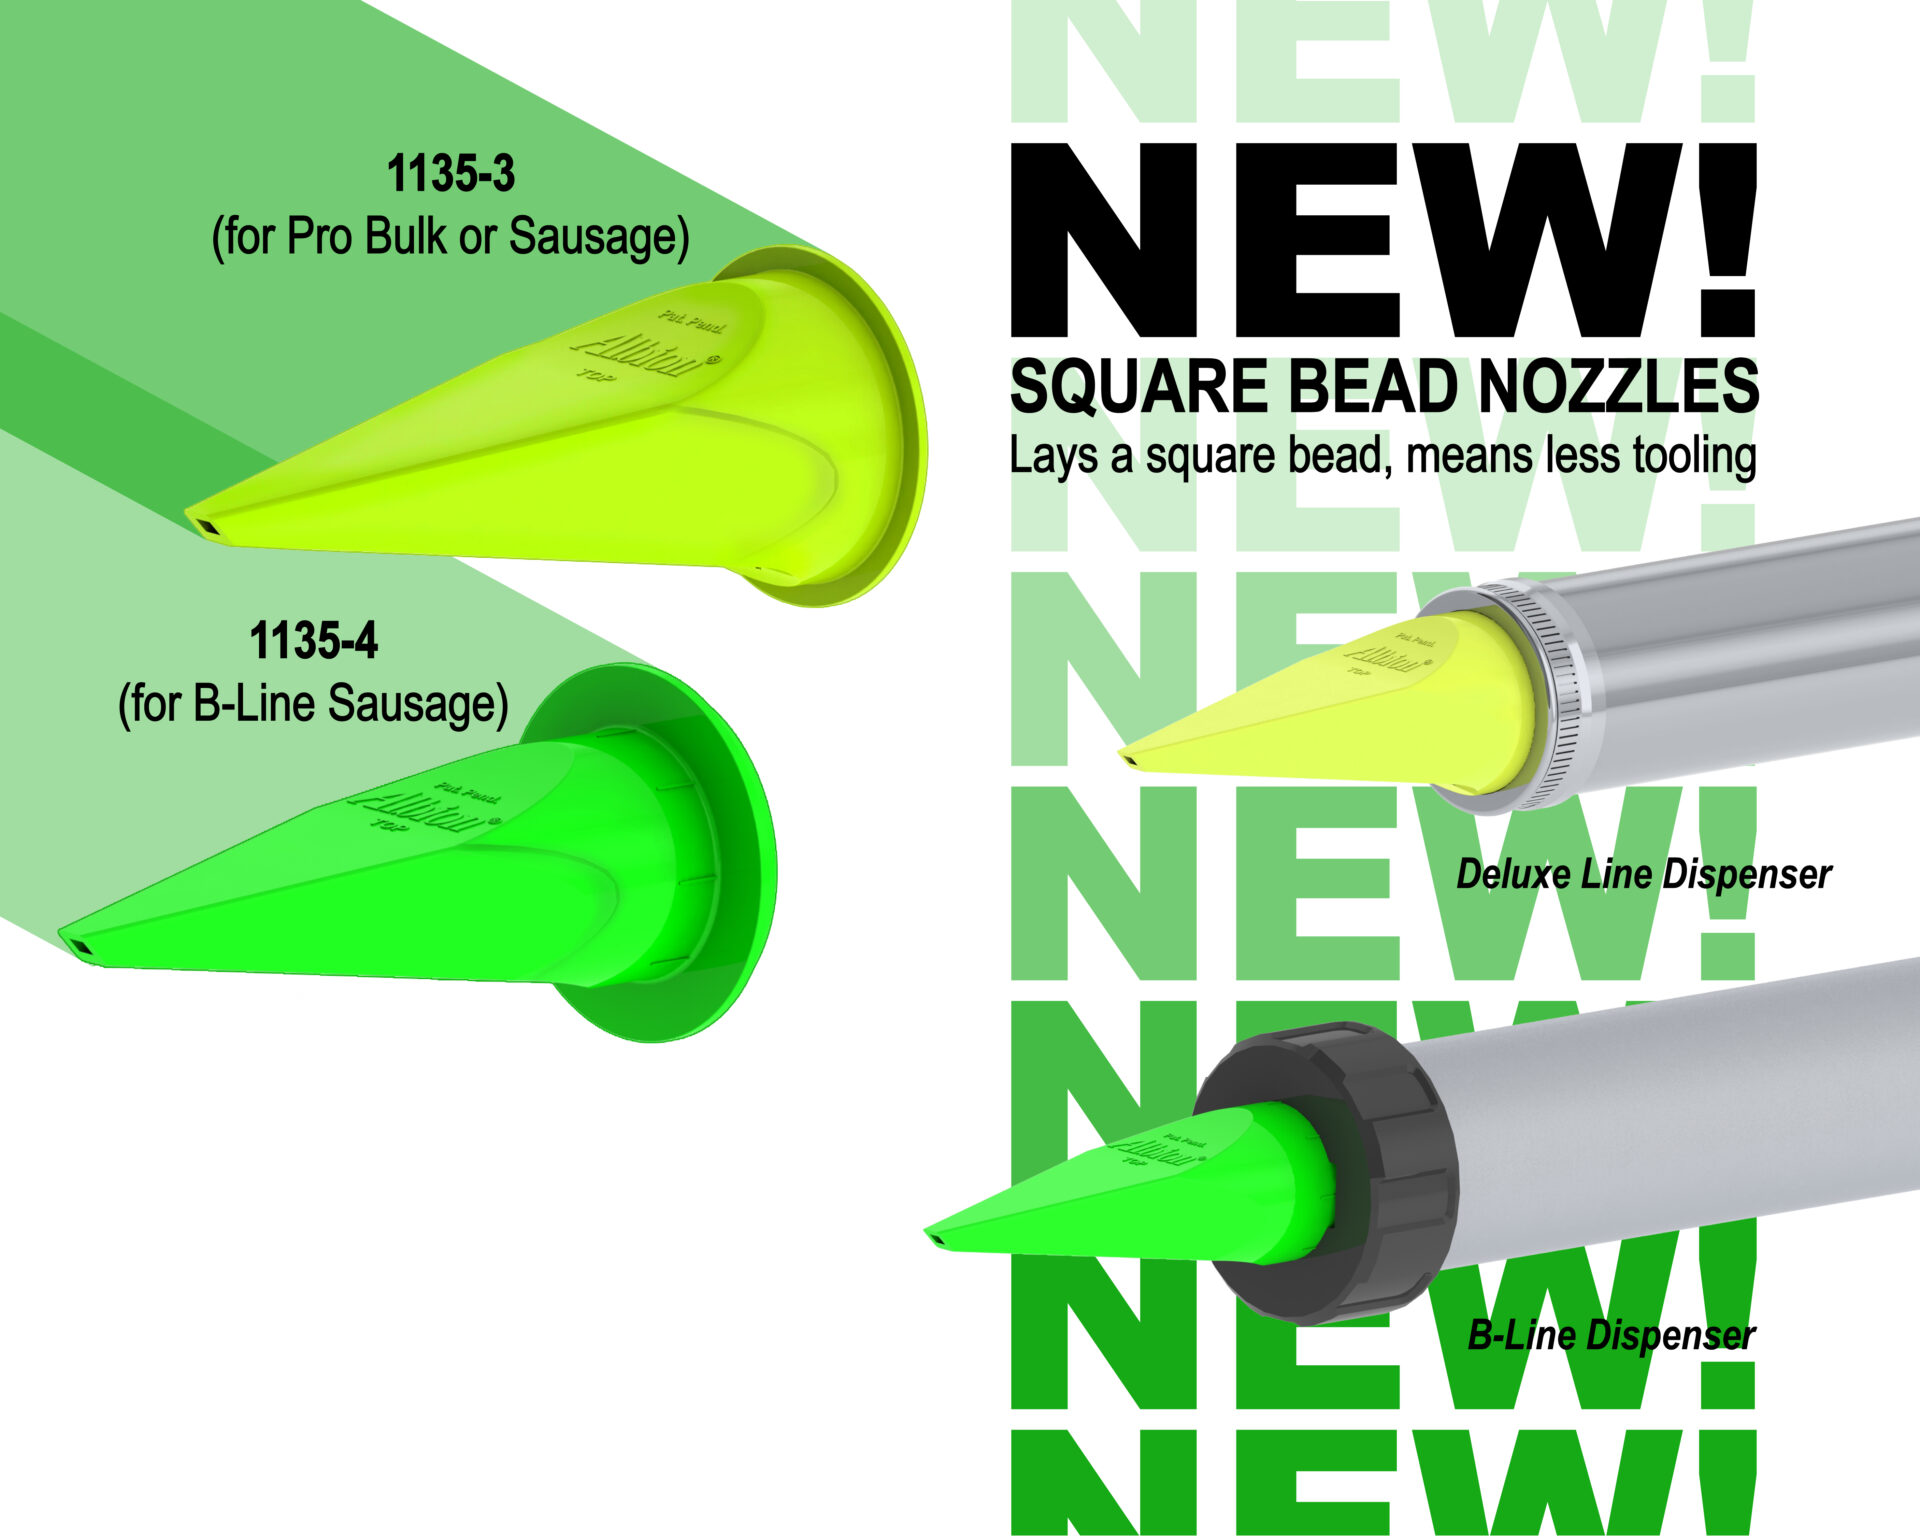 Albion Engineering's New Square Bead Nozzles